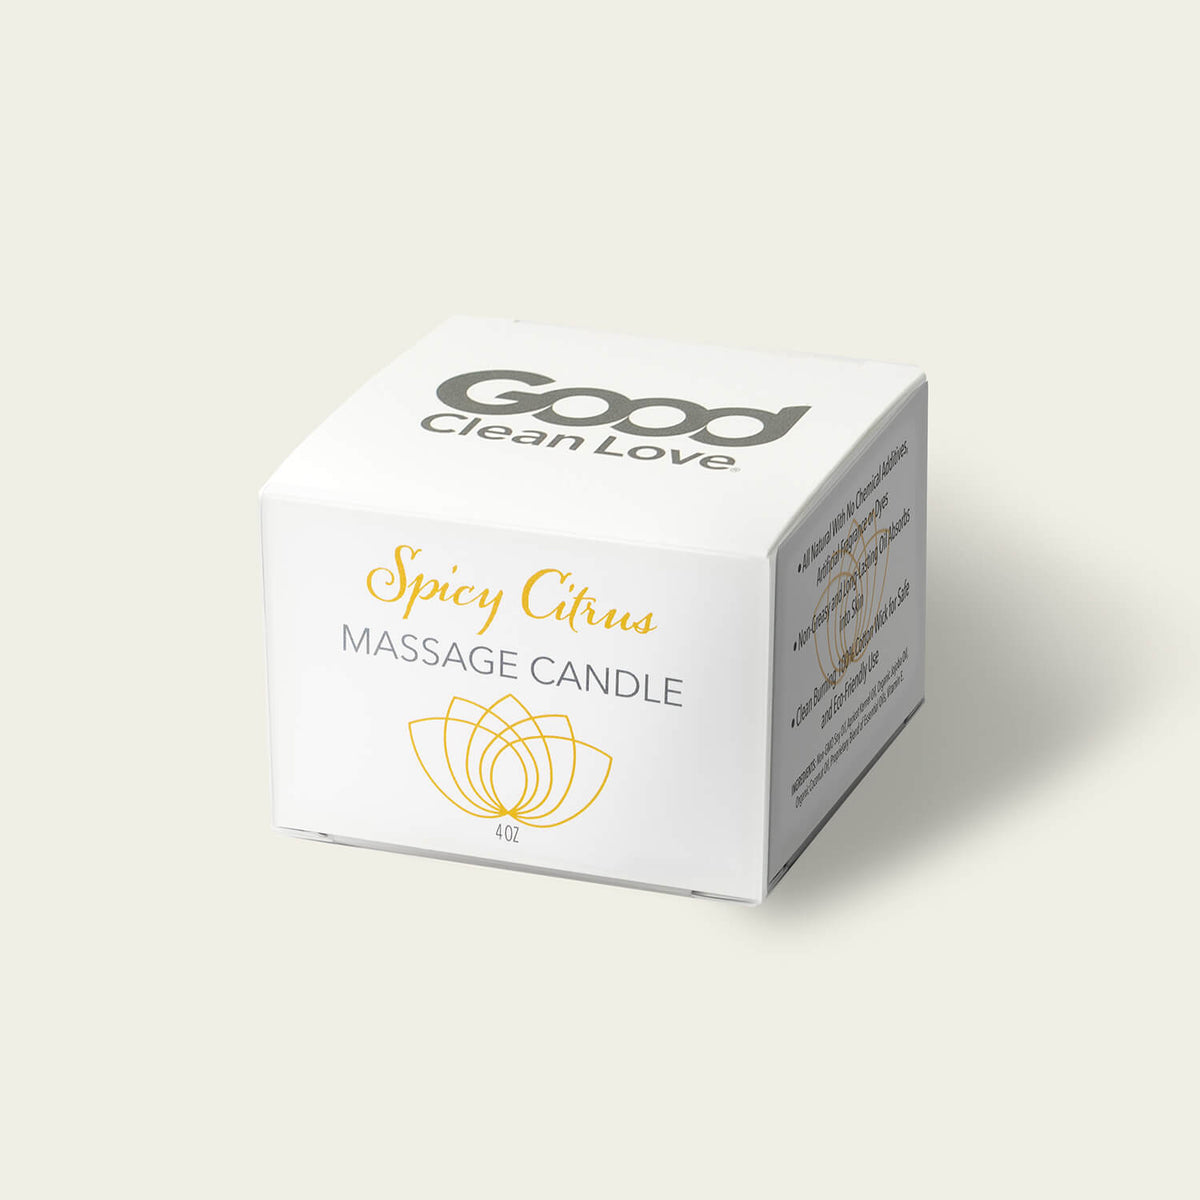 Spicy Citrus Massage Candle 4 oz